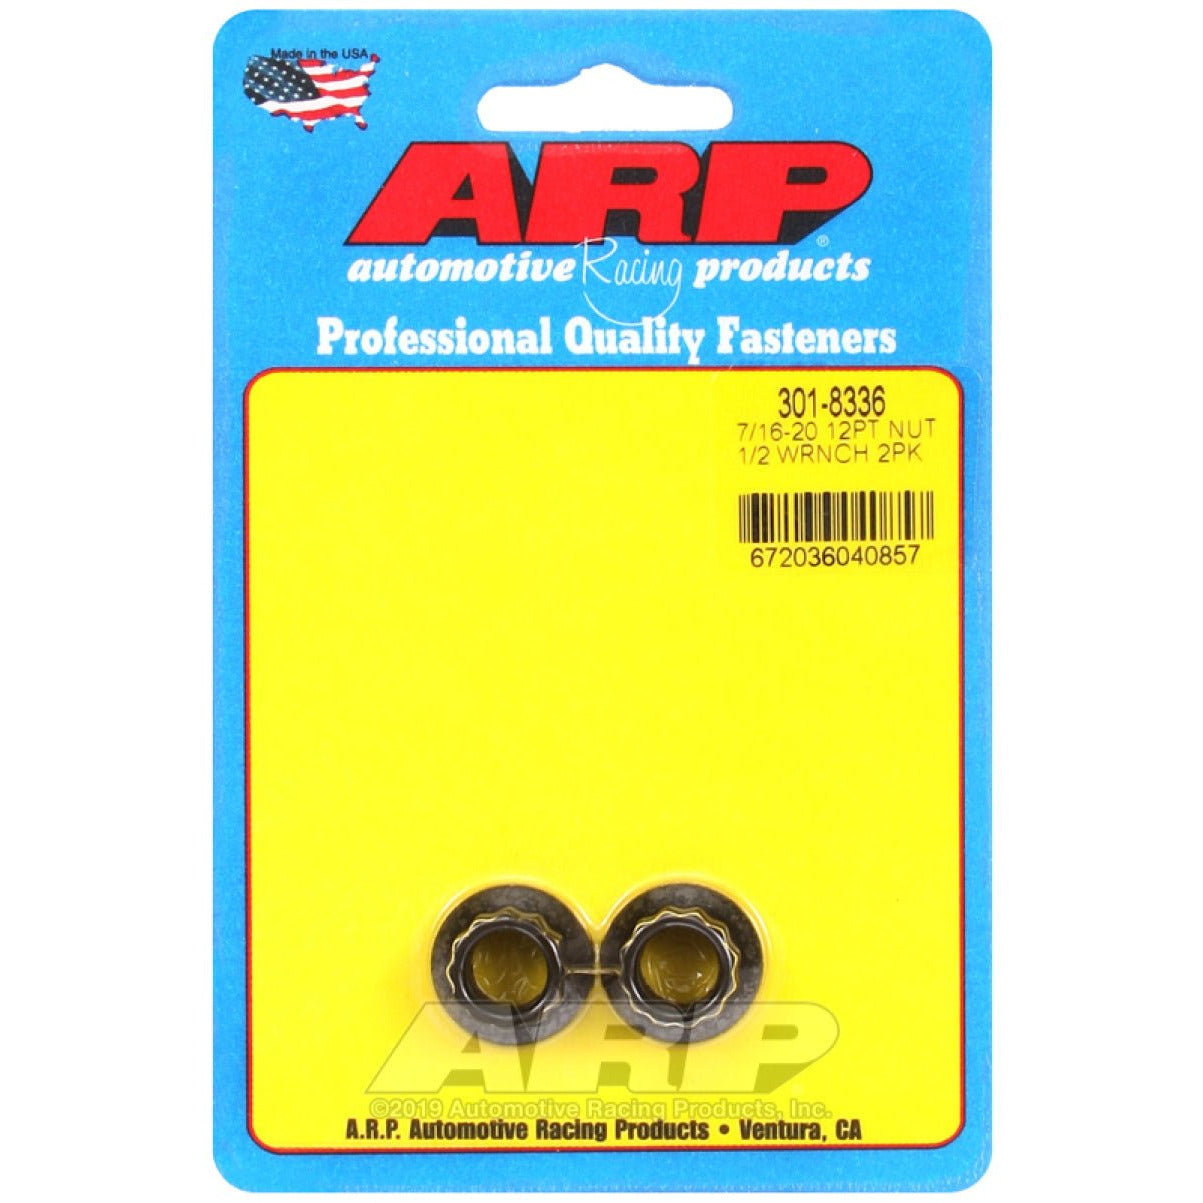 ARP 7/16in-20 1/2 Socket 12pt Nut Kit 2 Pack ARP Hardware Kits - Other